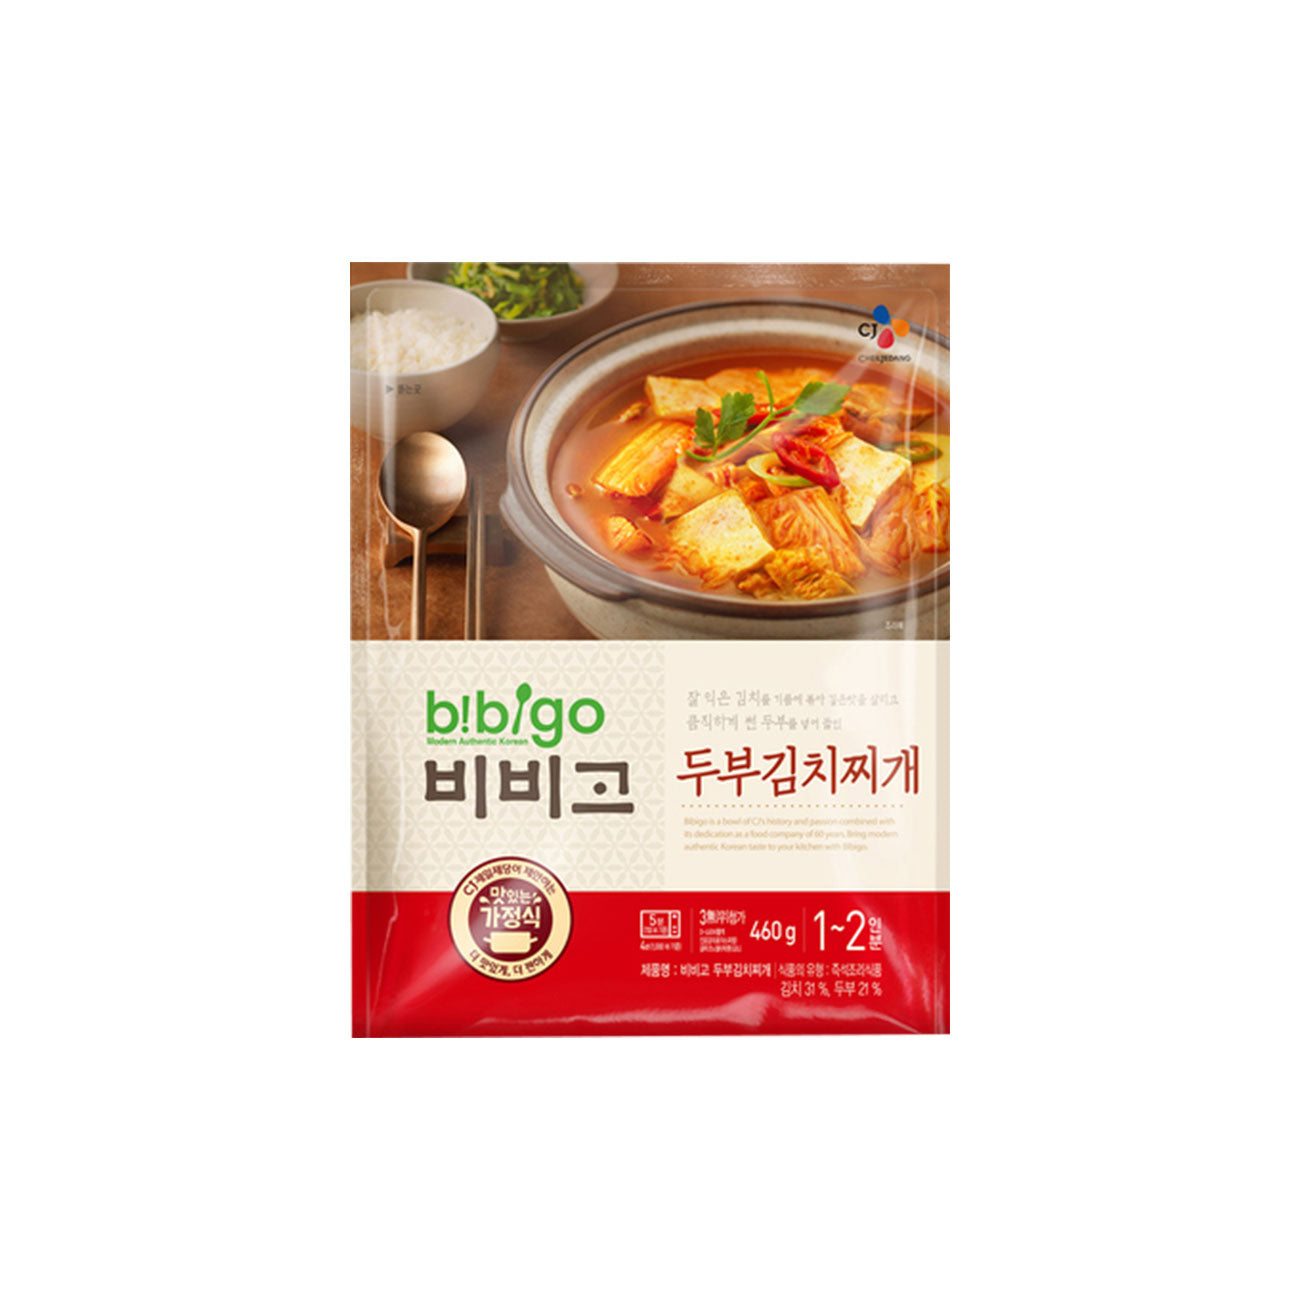 BBG Kimchi Stew W/ Tofu 12/460g 비비고 두부김치찌게